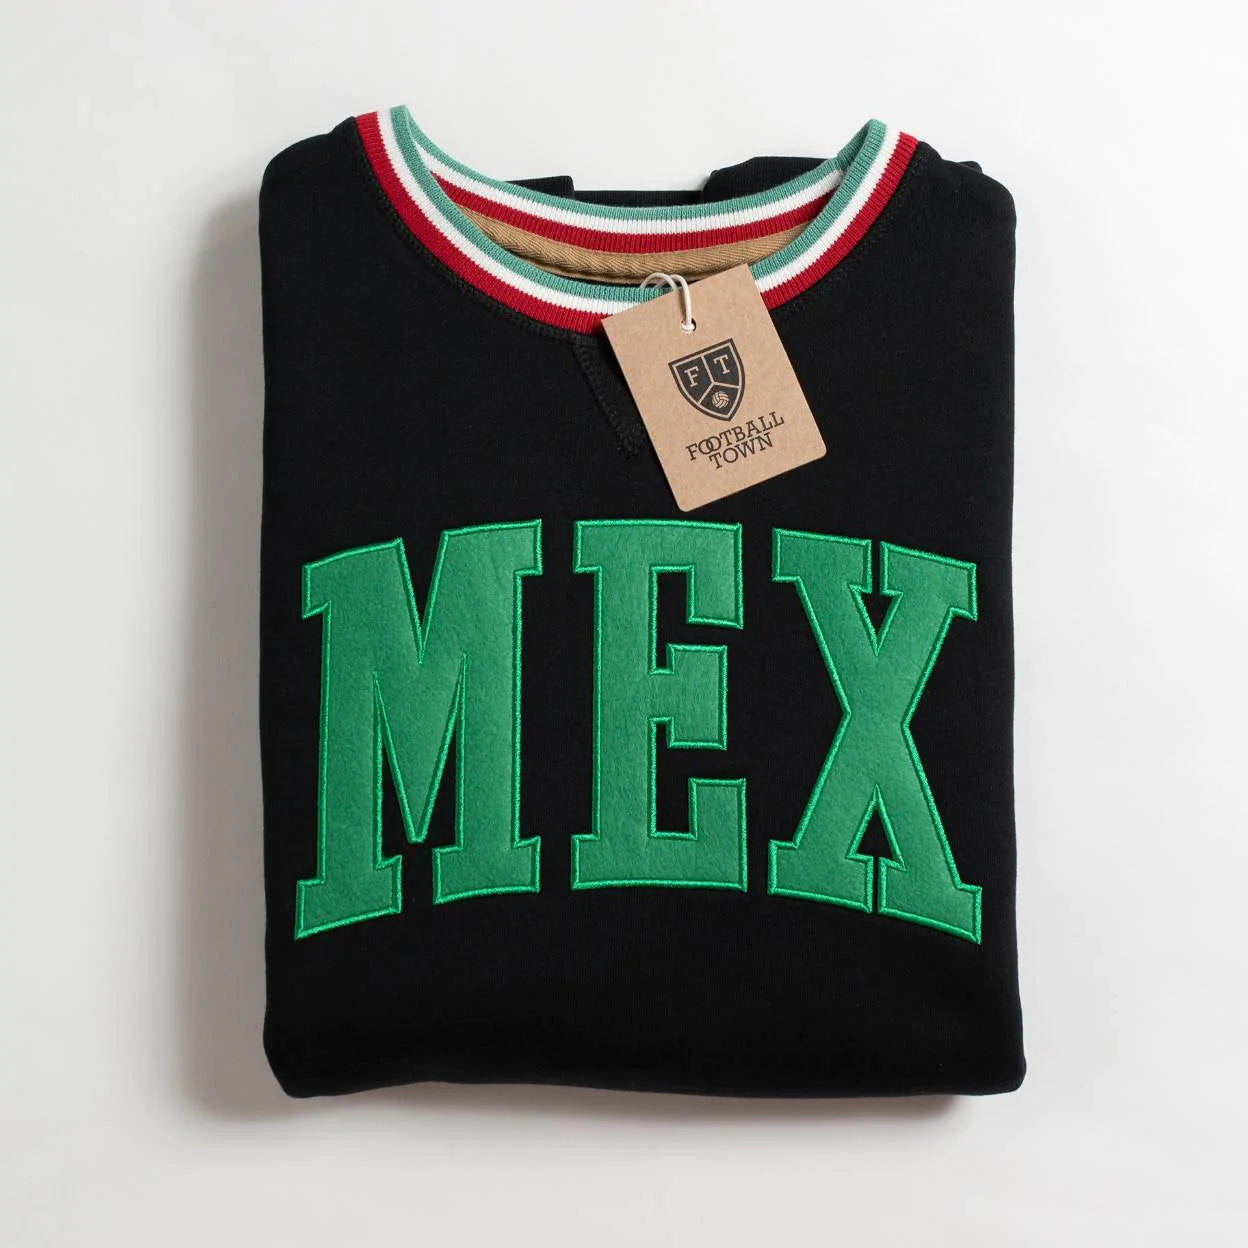 Sweatshirt MEX